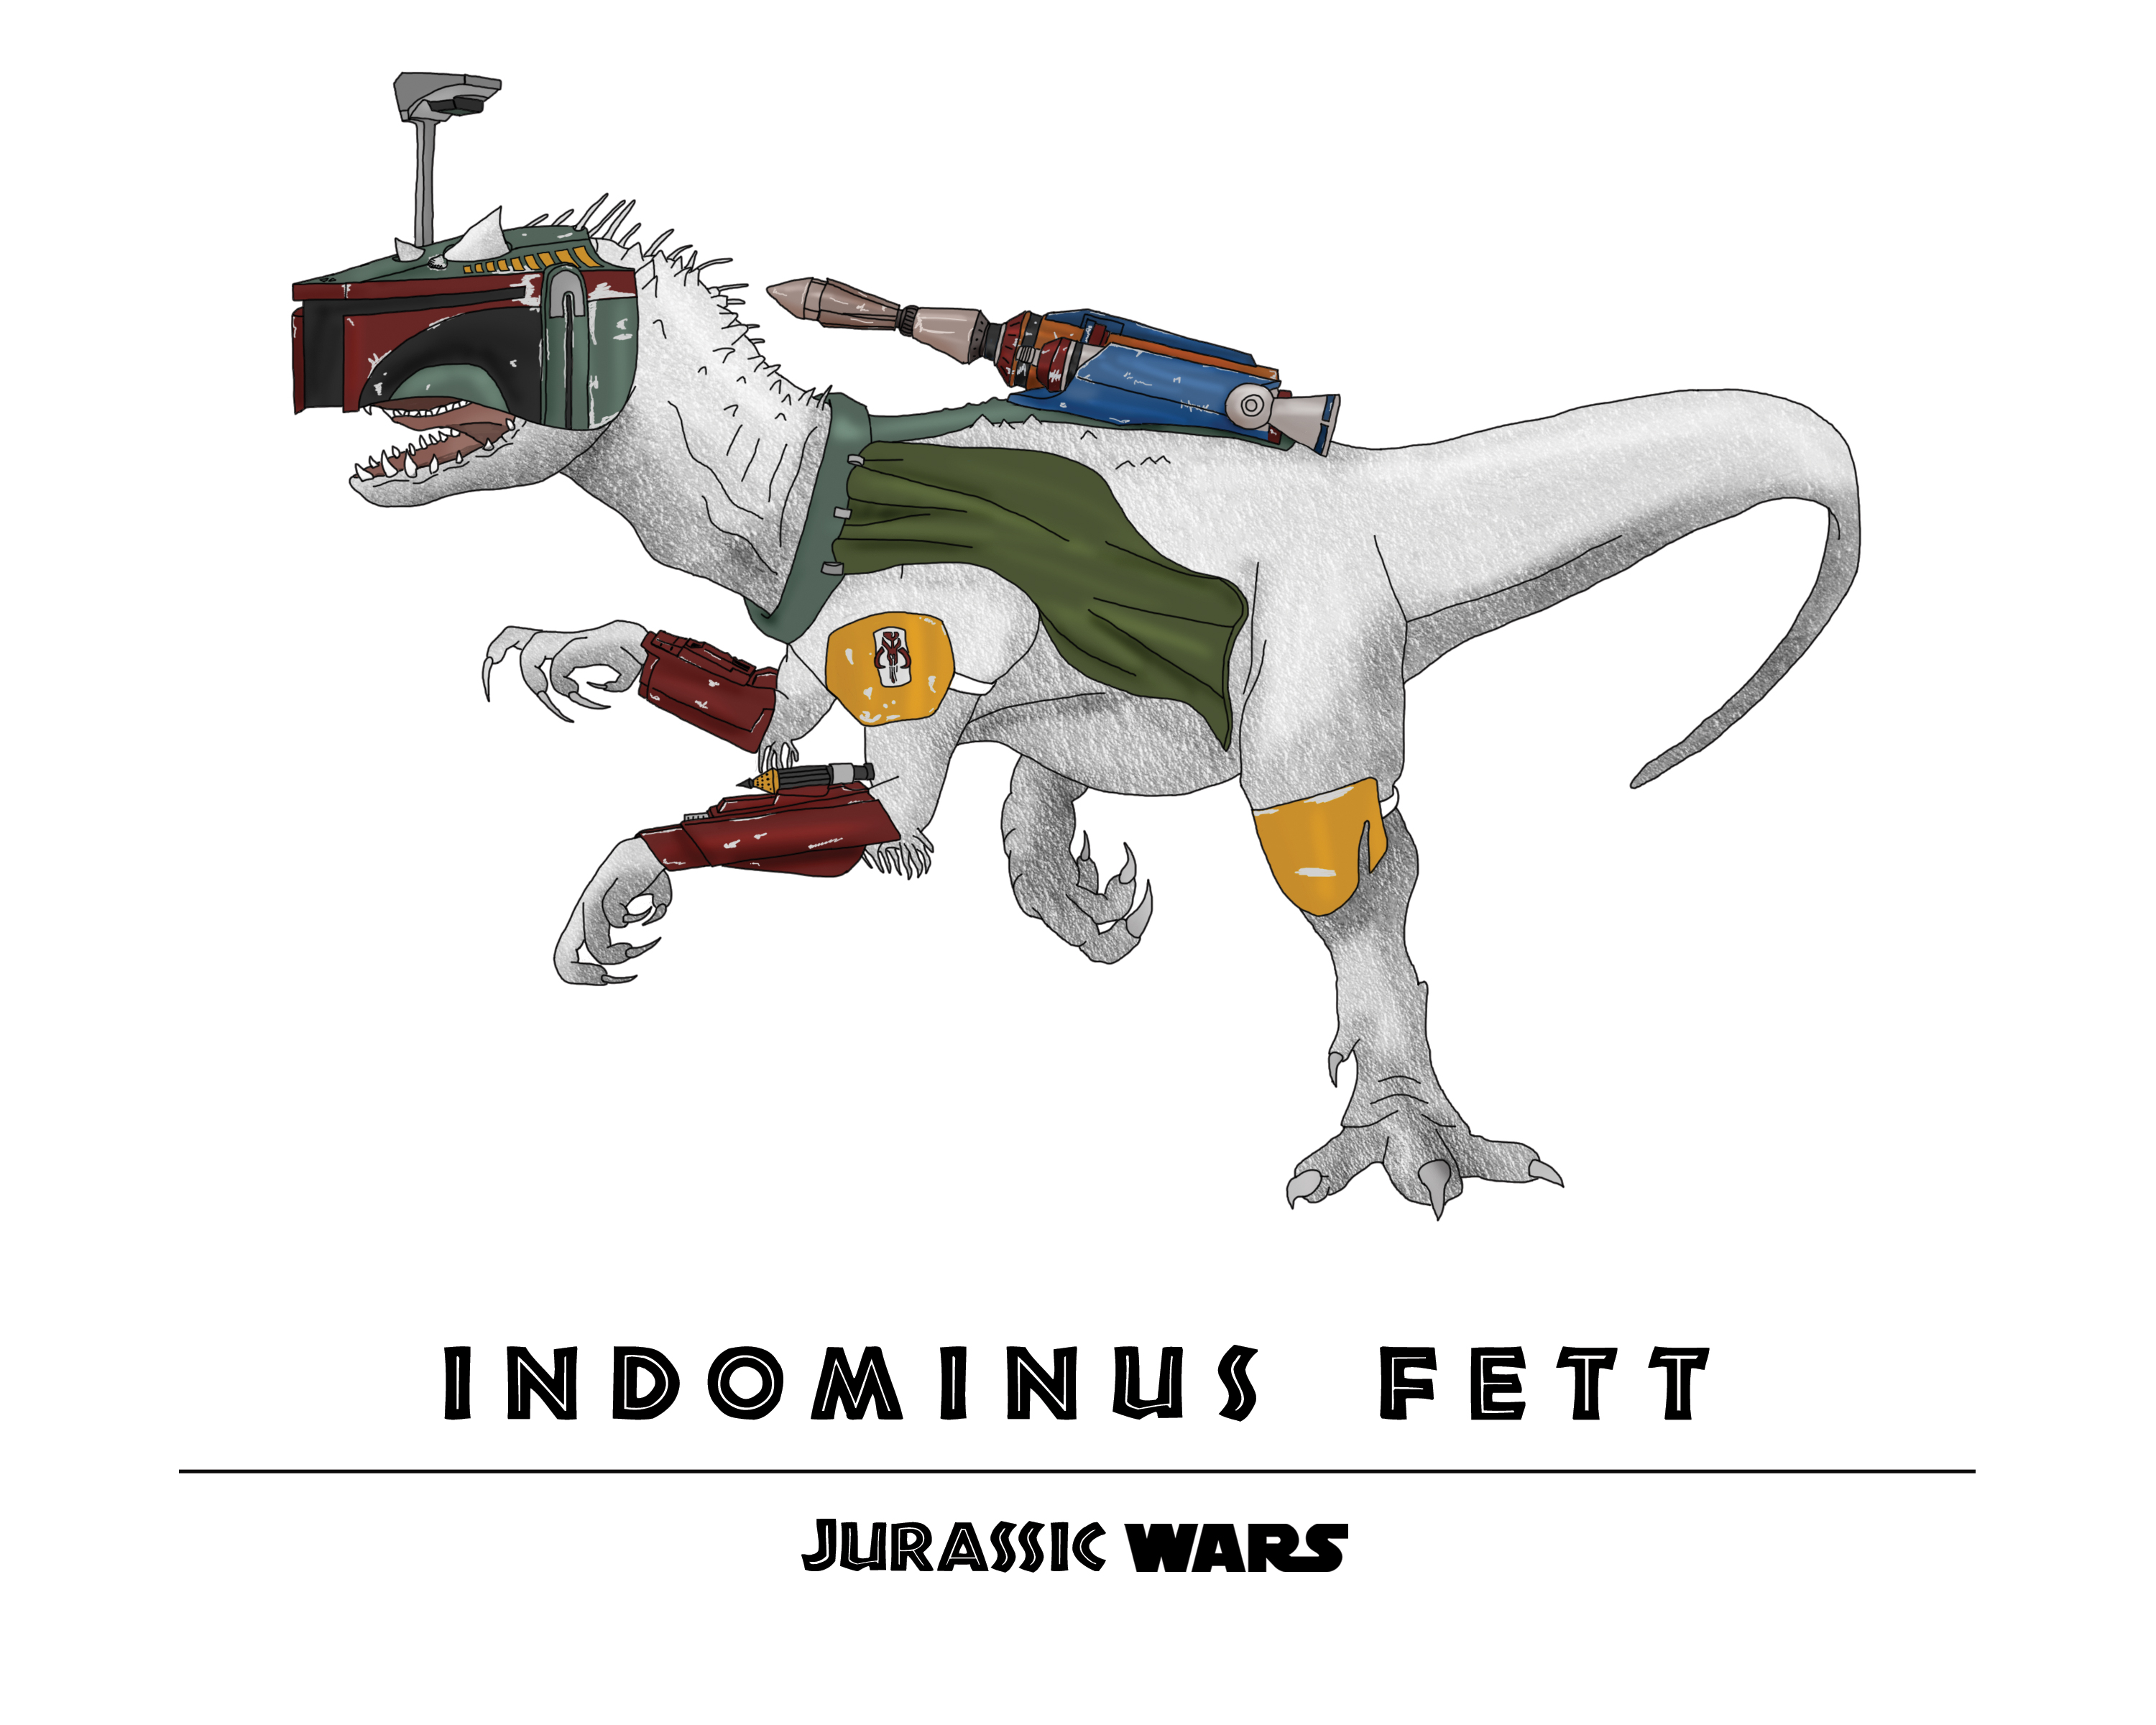 Jurassic-Wars-Indominus-Fett.jpg